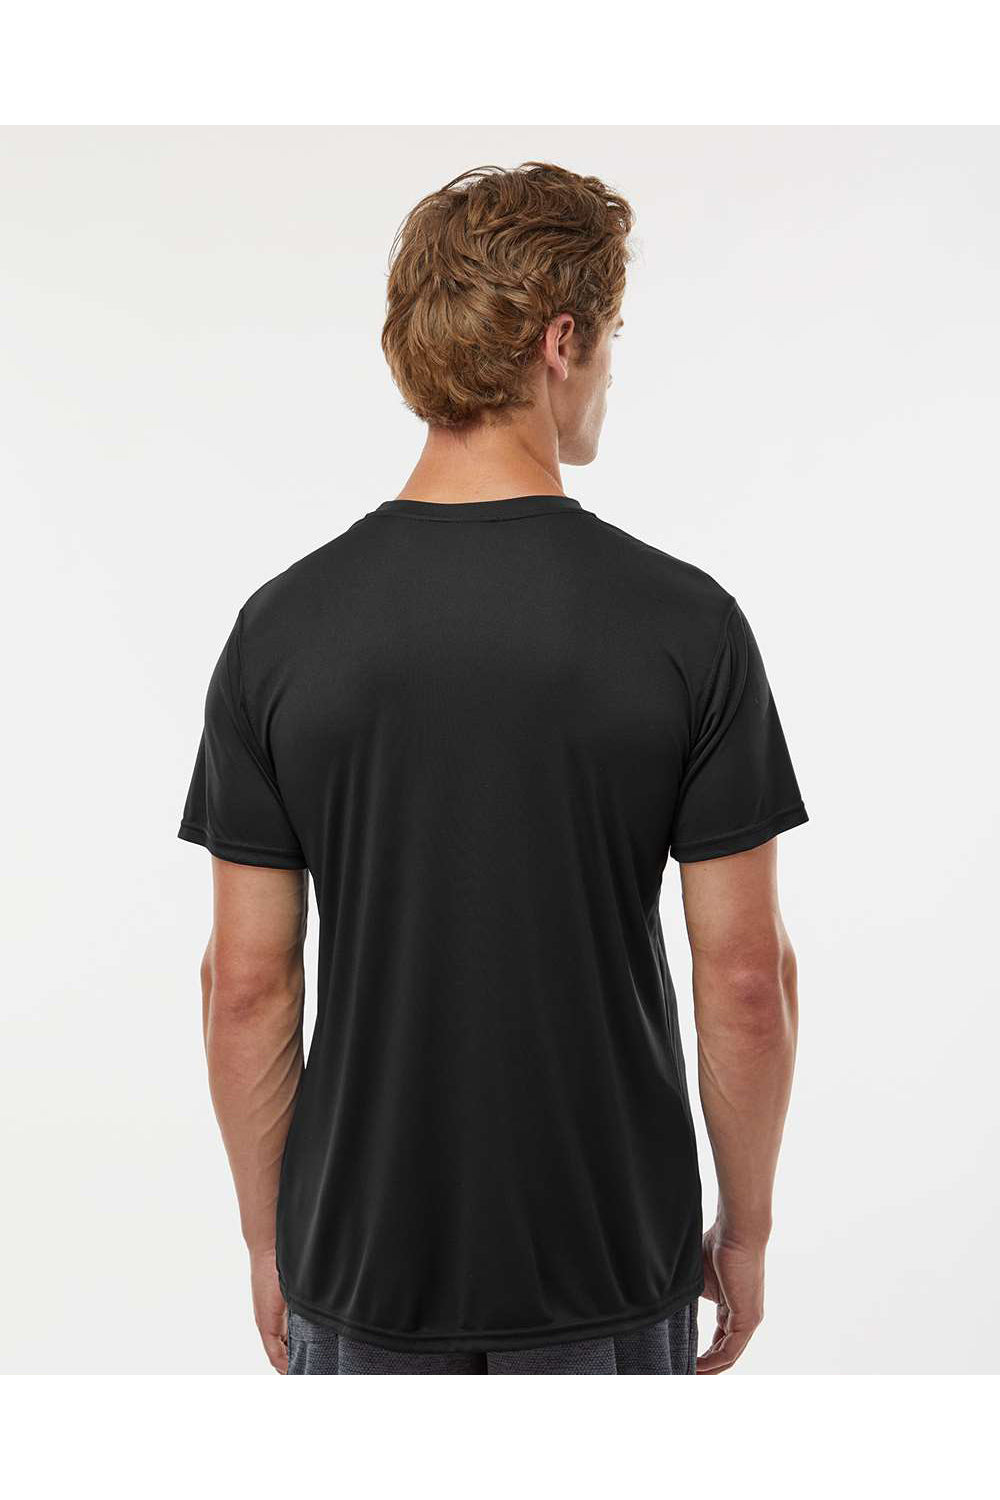 Holloway 222818 Mens Momentum Short Sleeve Crewneck T-Shirt Black Model Back